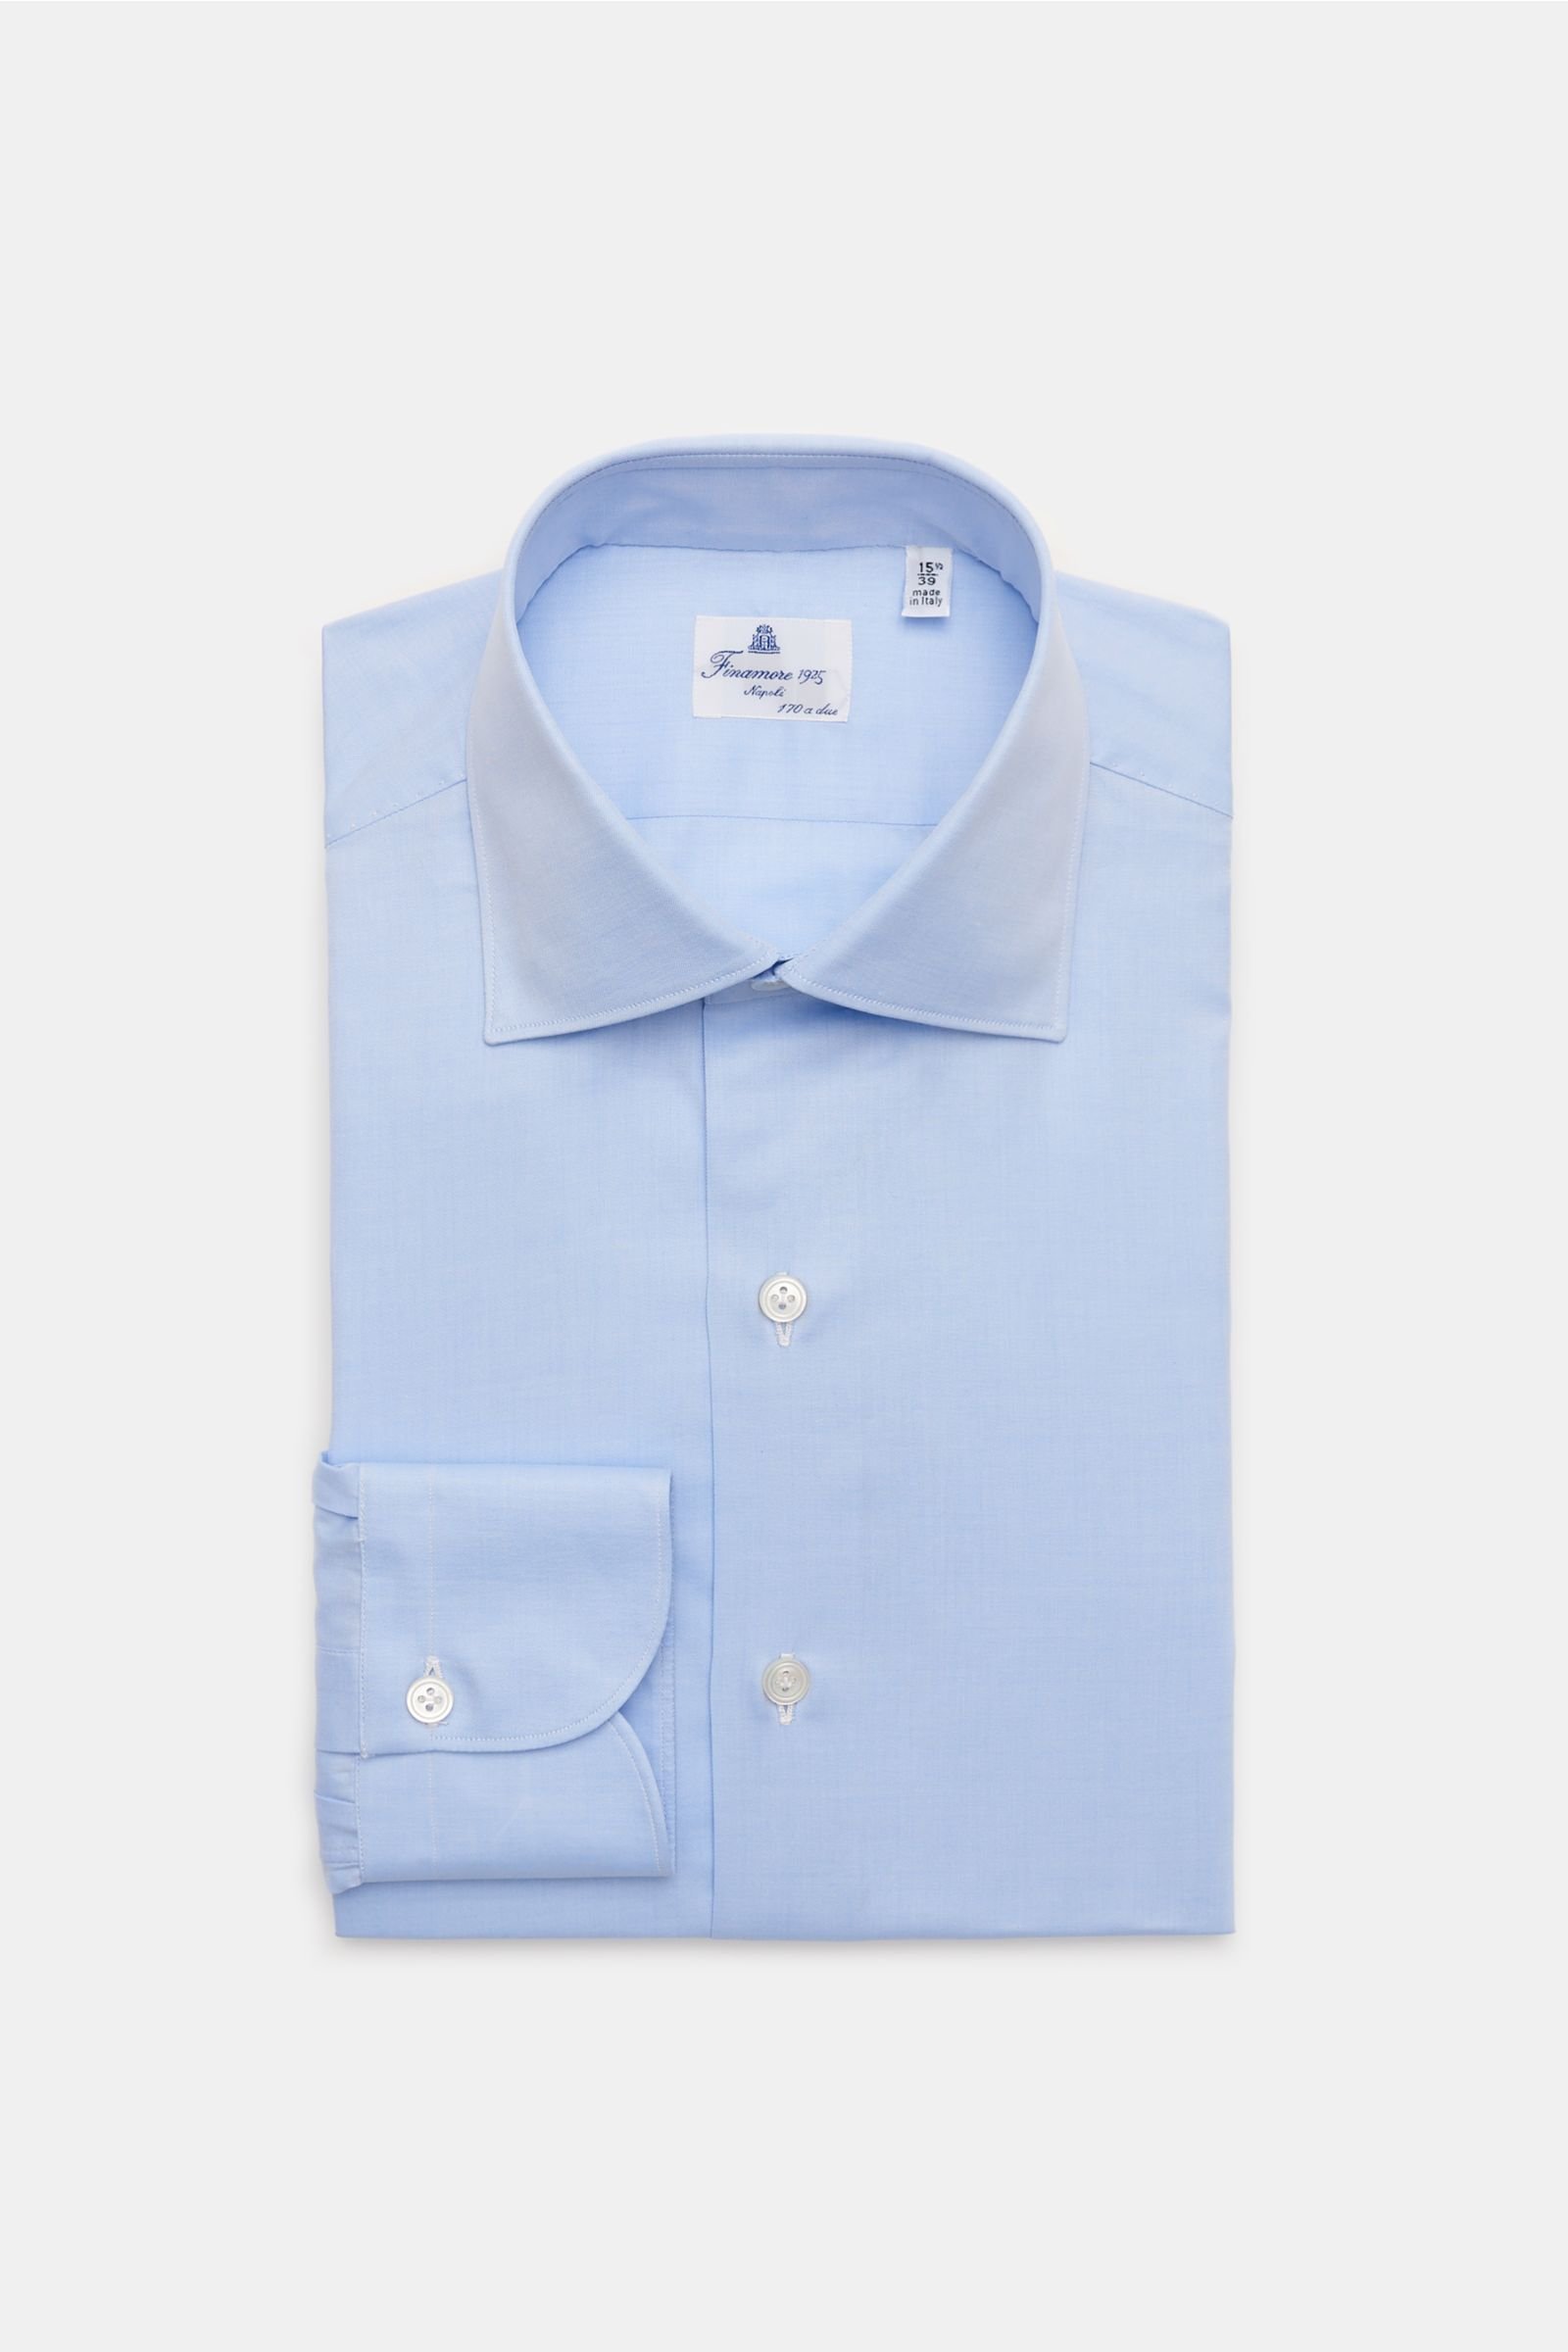 Business shirt 'Luigi Milano' shark collar light blue